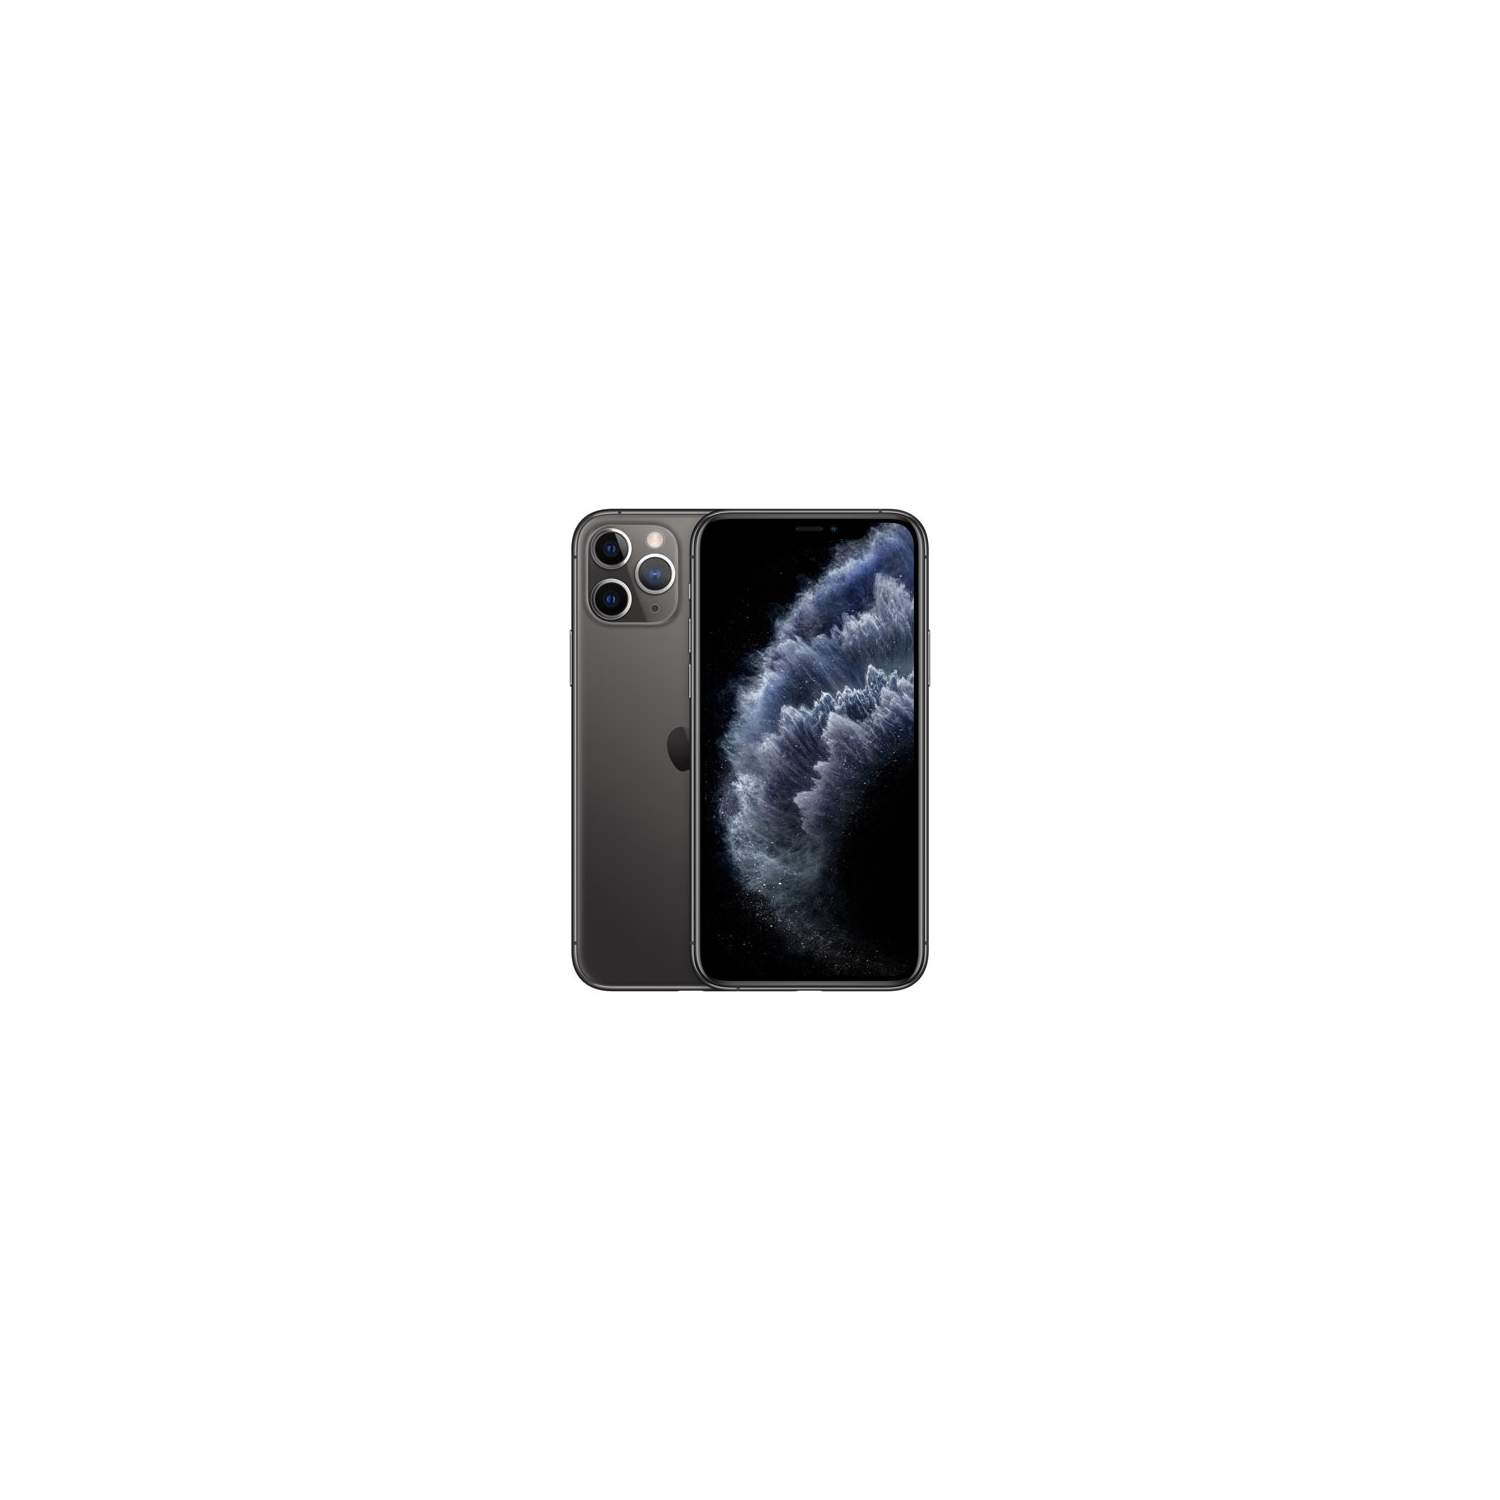 Refurbished (Fair) - Apple iPhone 11 Pro Max 64GB - Silver - Unlocked